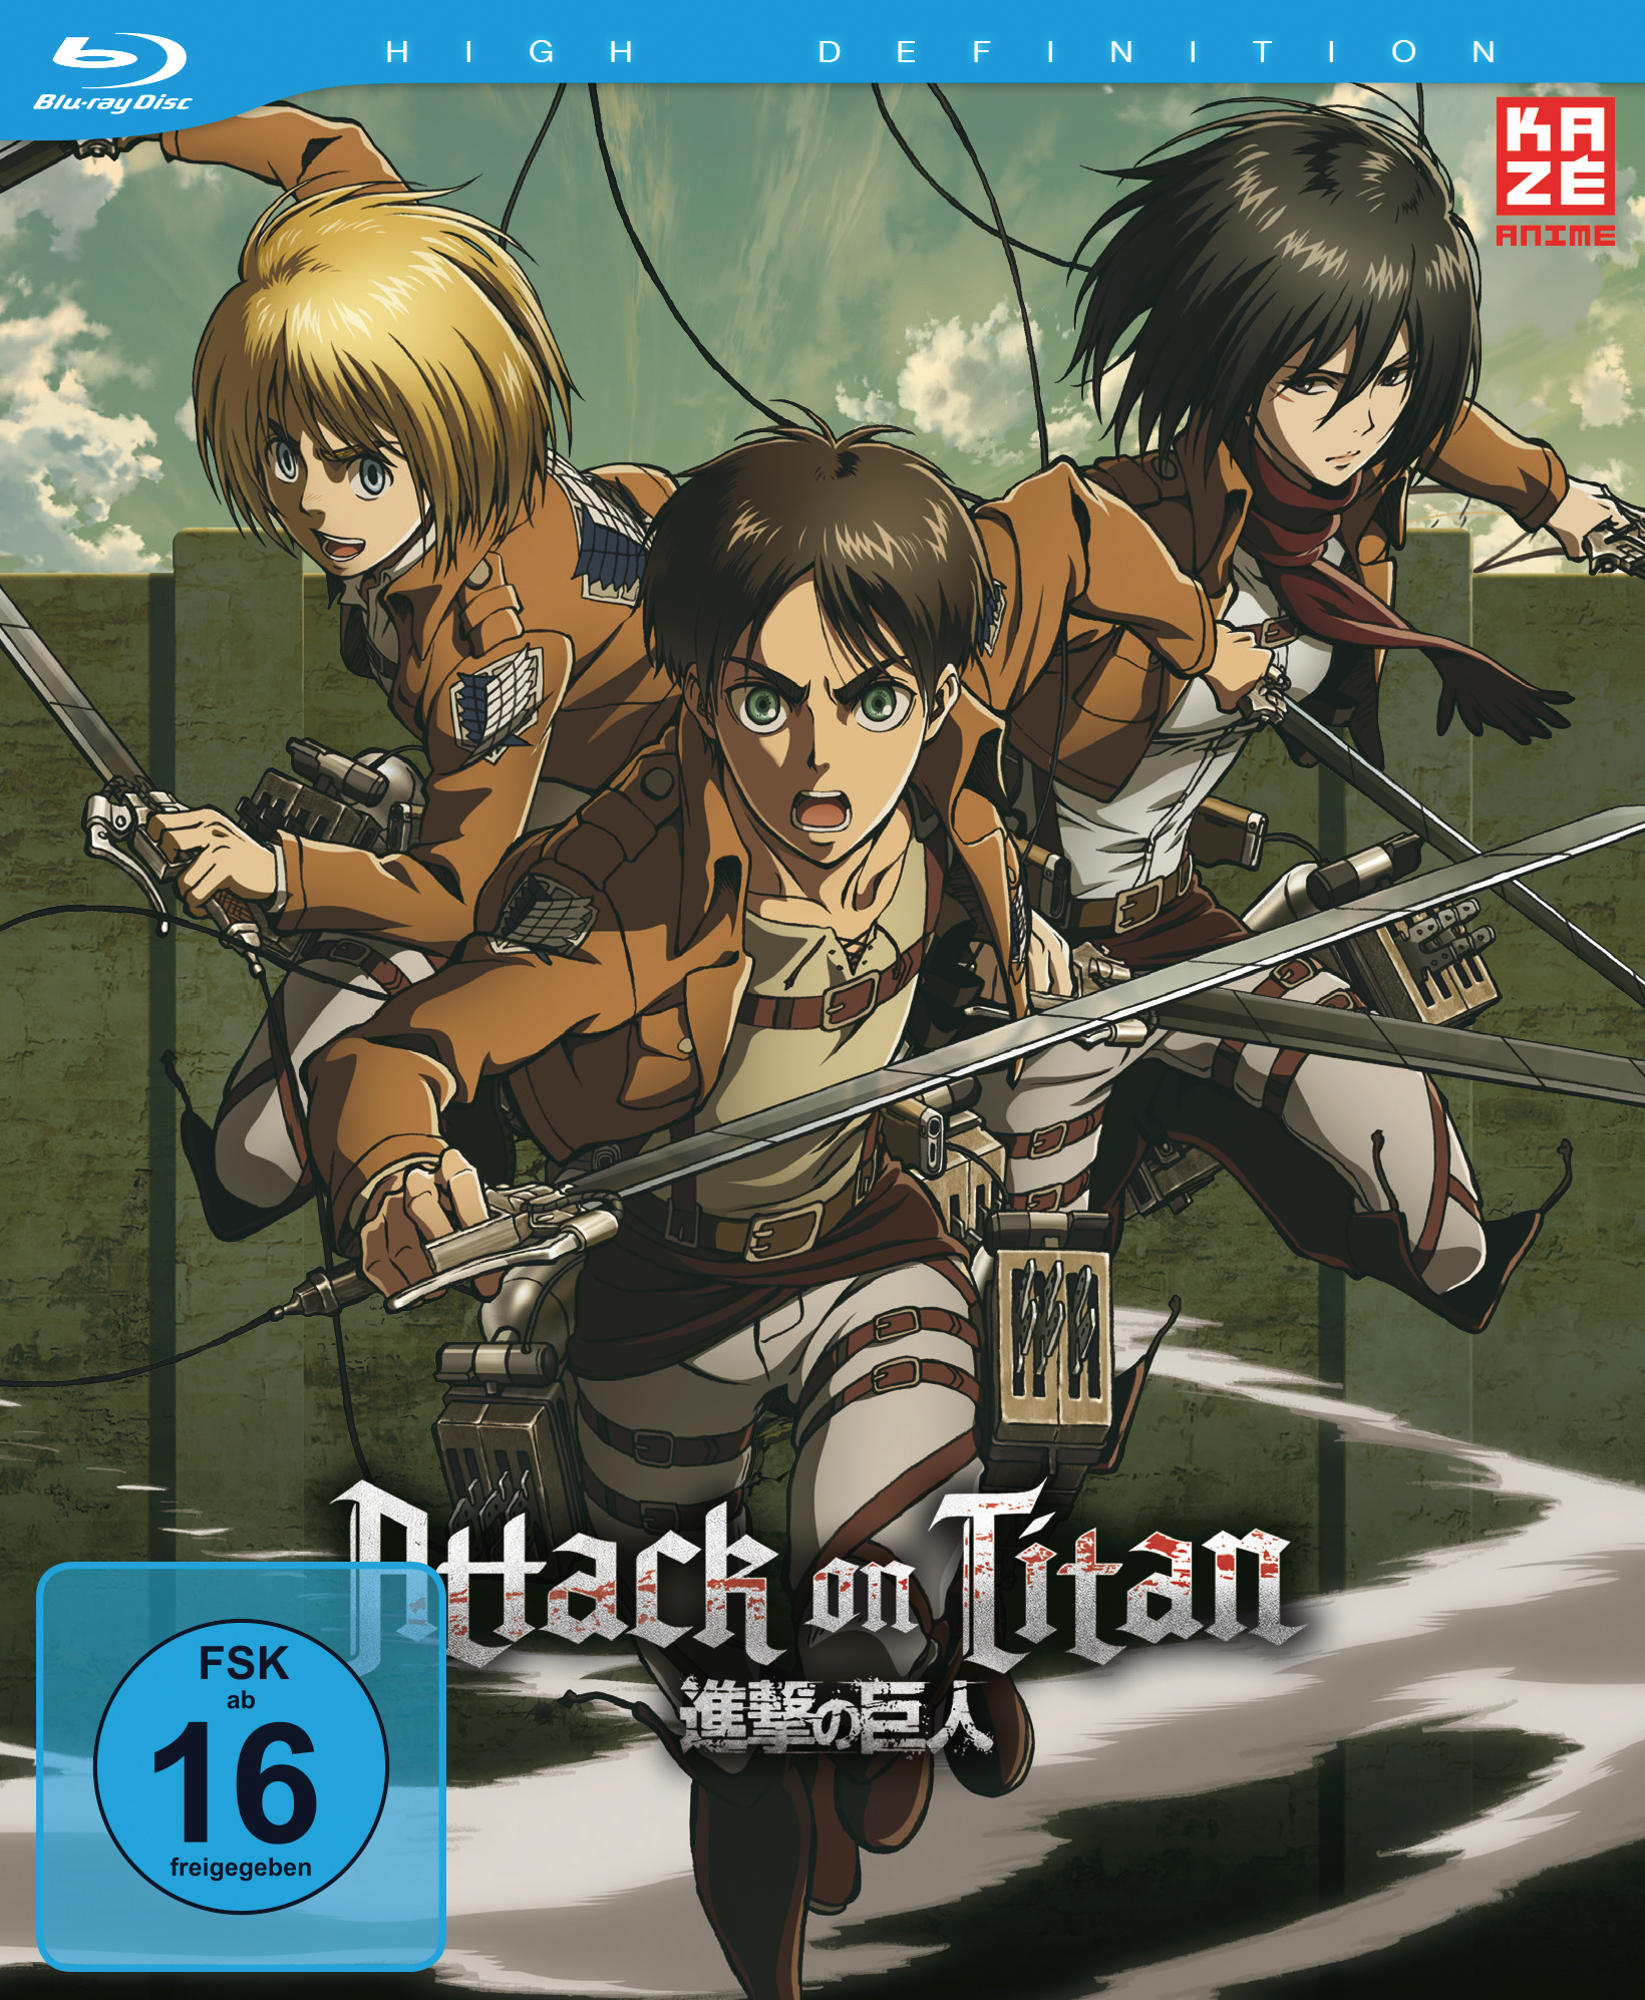 Blu-ray Attack Vol. Titan on 4